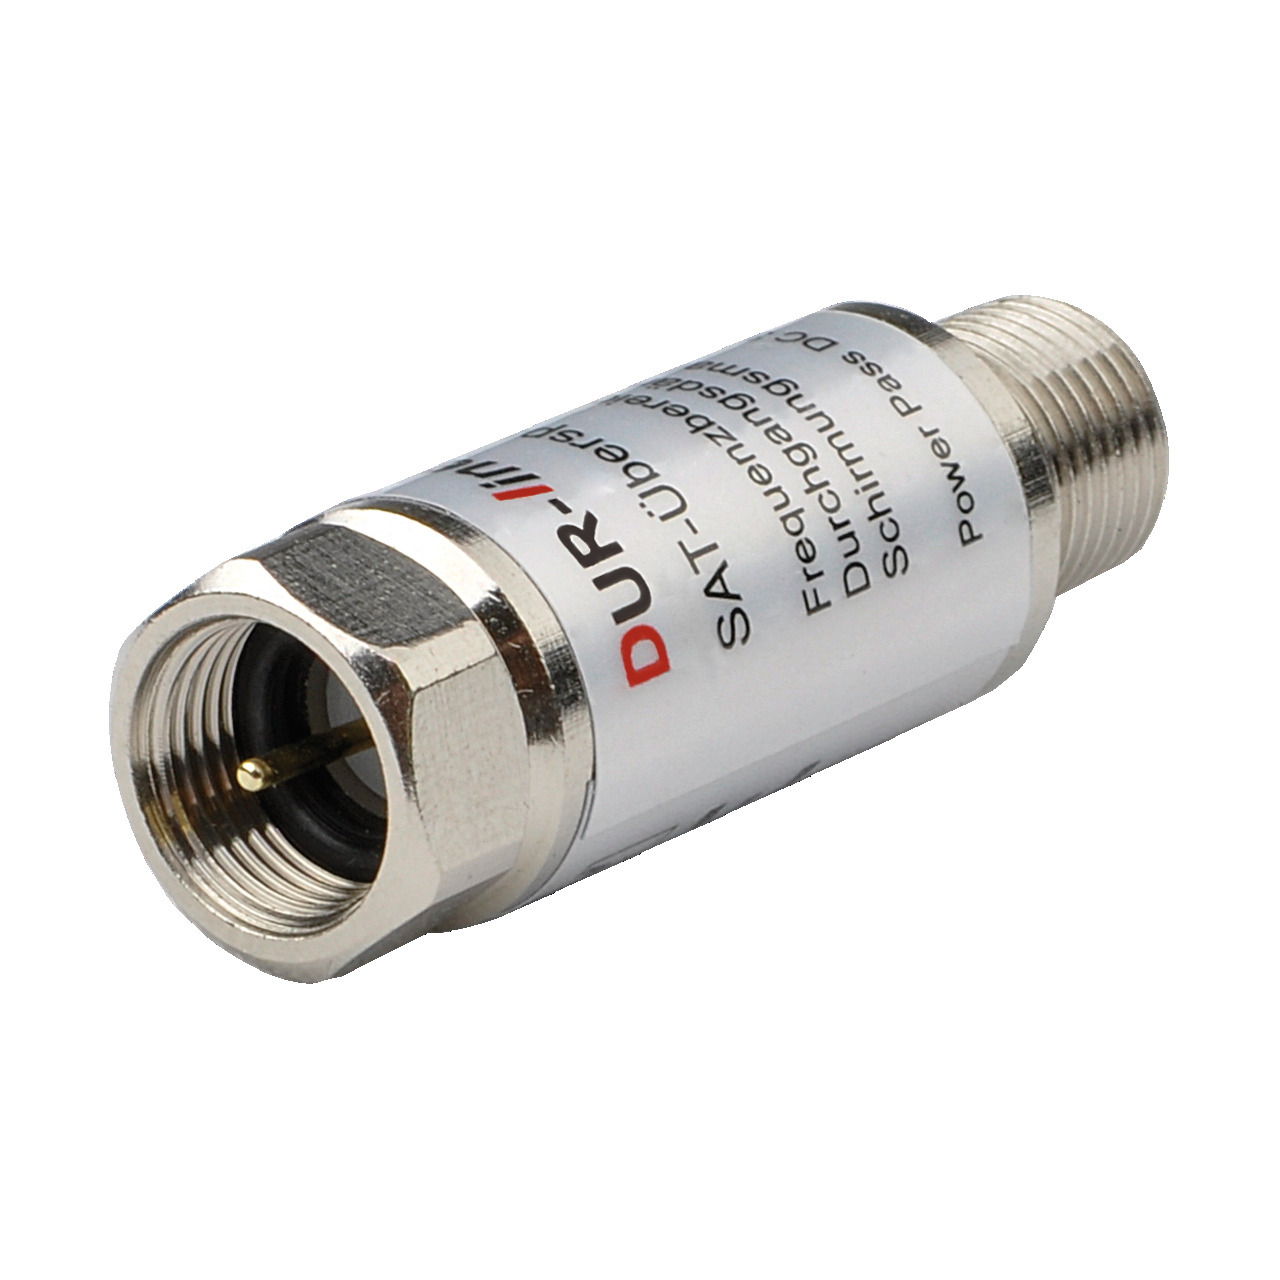 DUR-line berspannungs-Blitzschutz DLBS 3001- 0-3 dB Durchgangsdmpfung- passend zu Erdungsblcken unter Multimedia